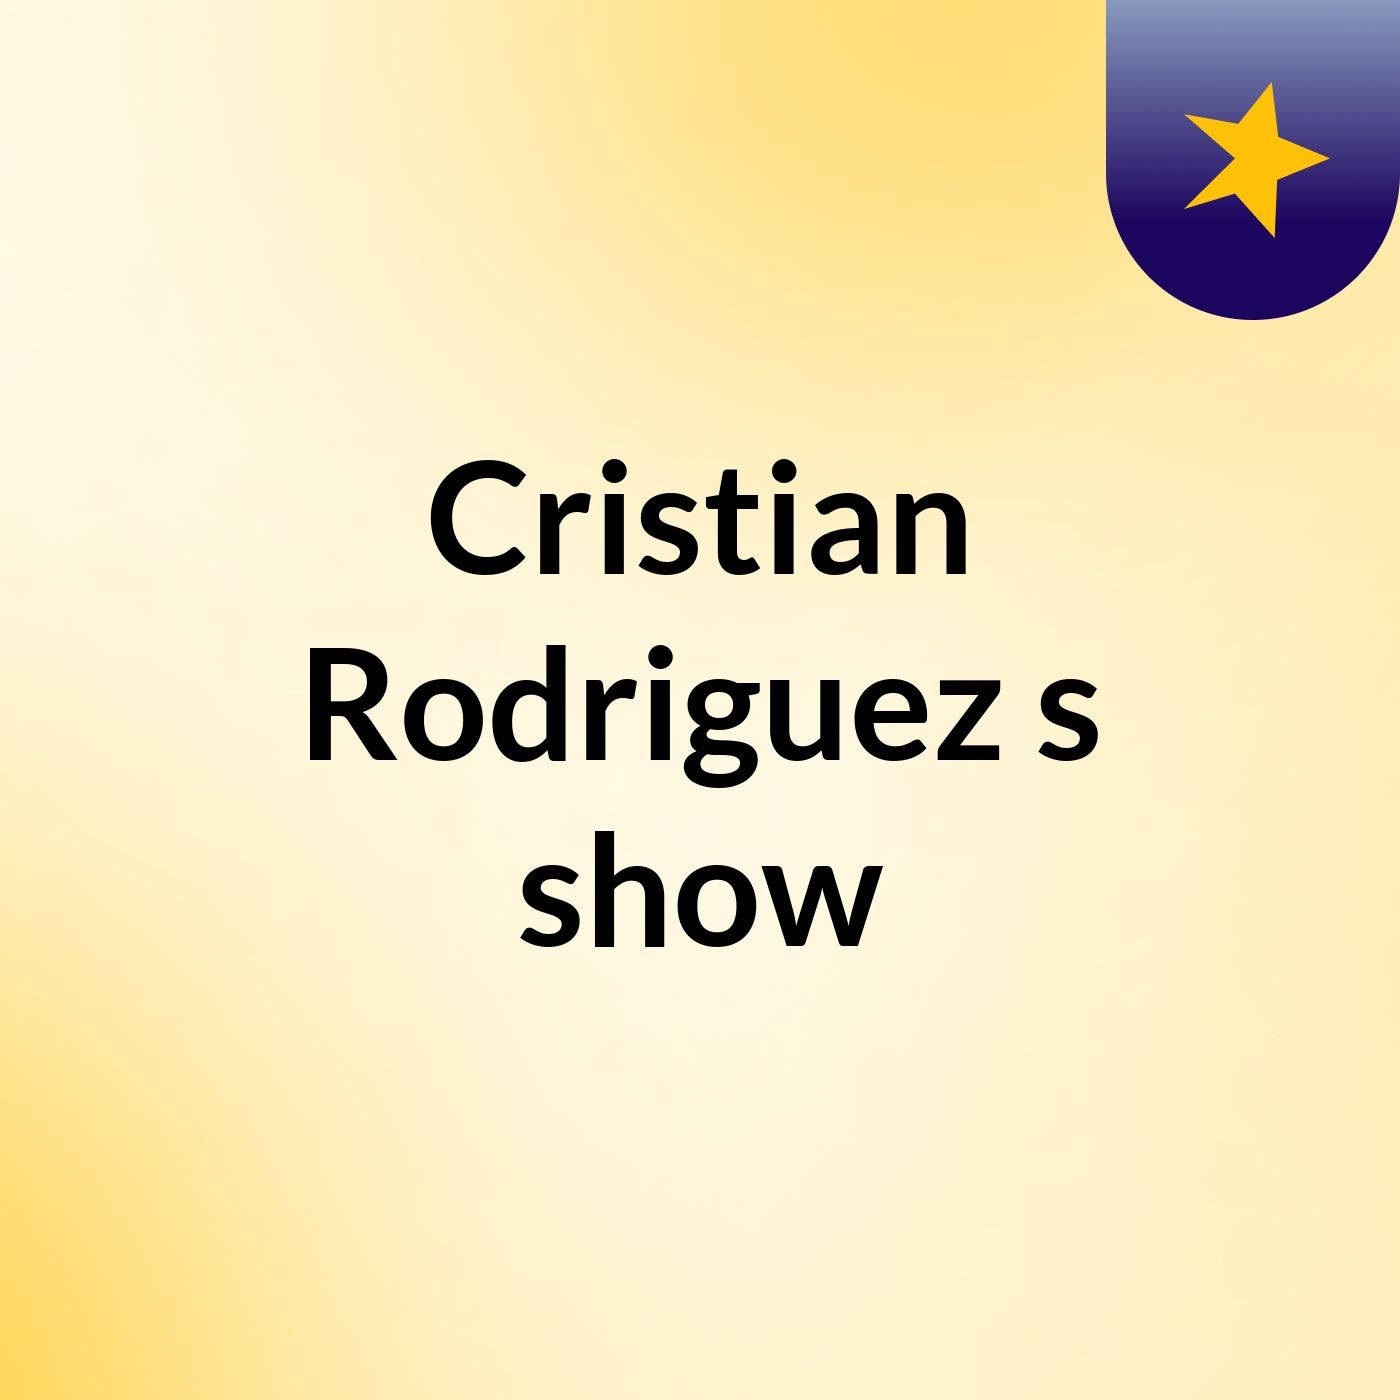 Cristian Rodriguez's show